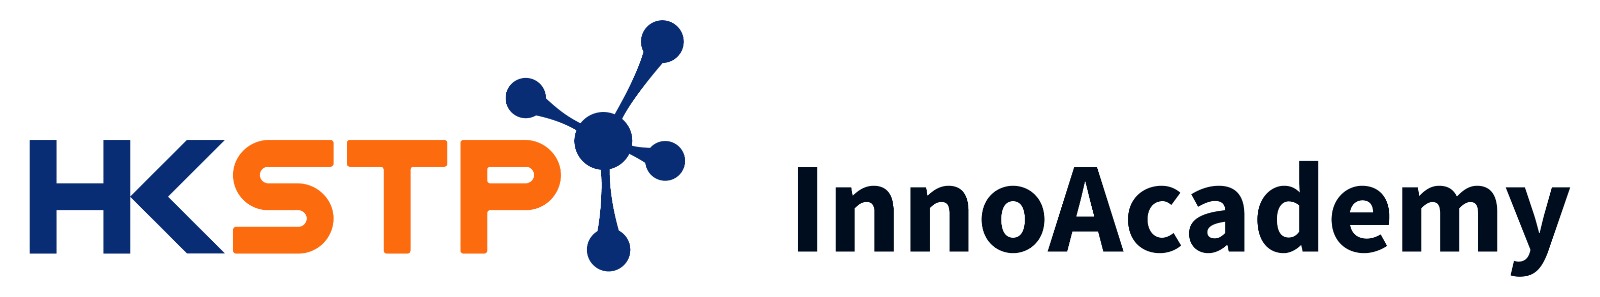 HKSTP InnoAcademy logo